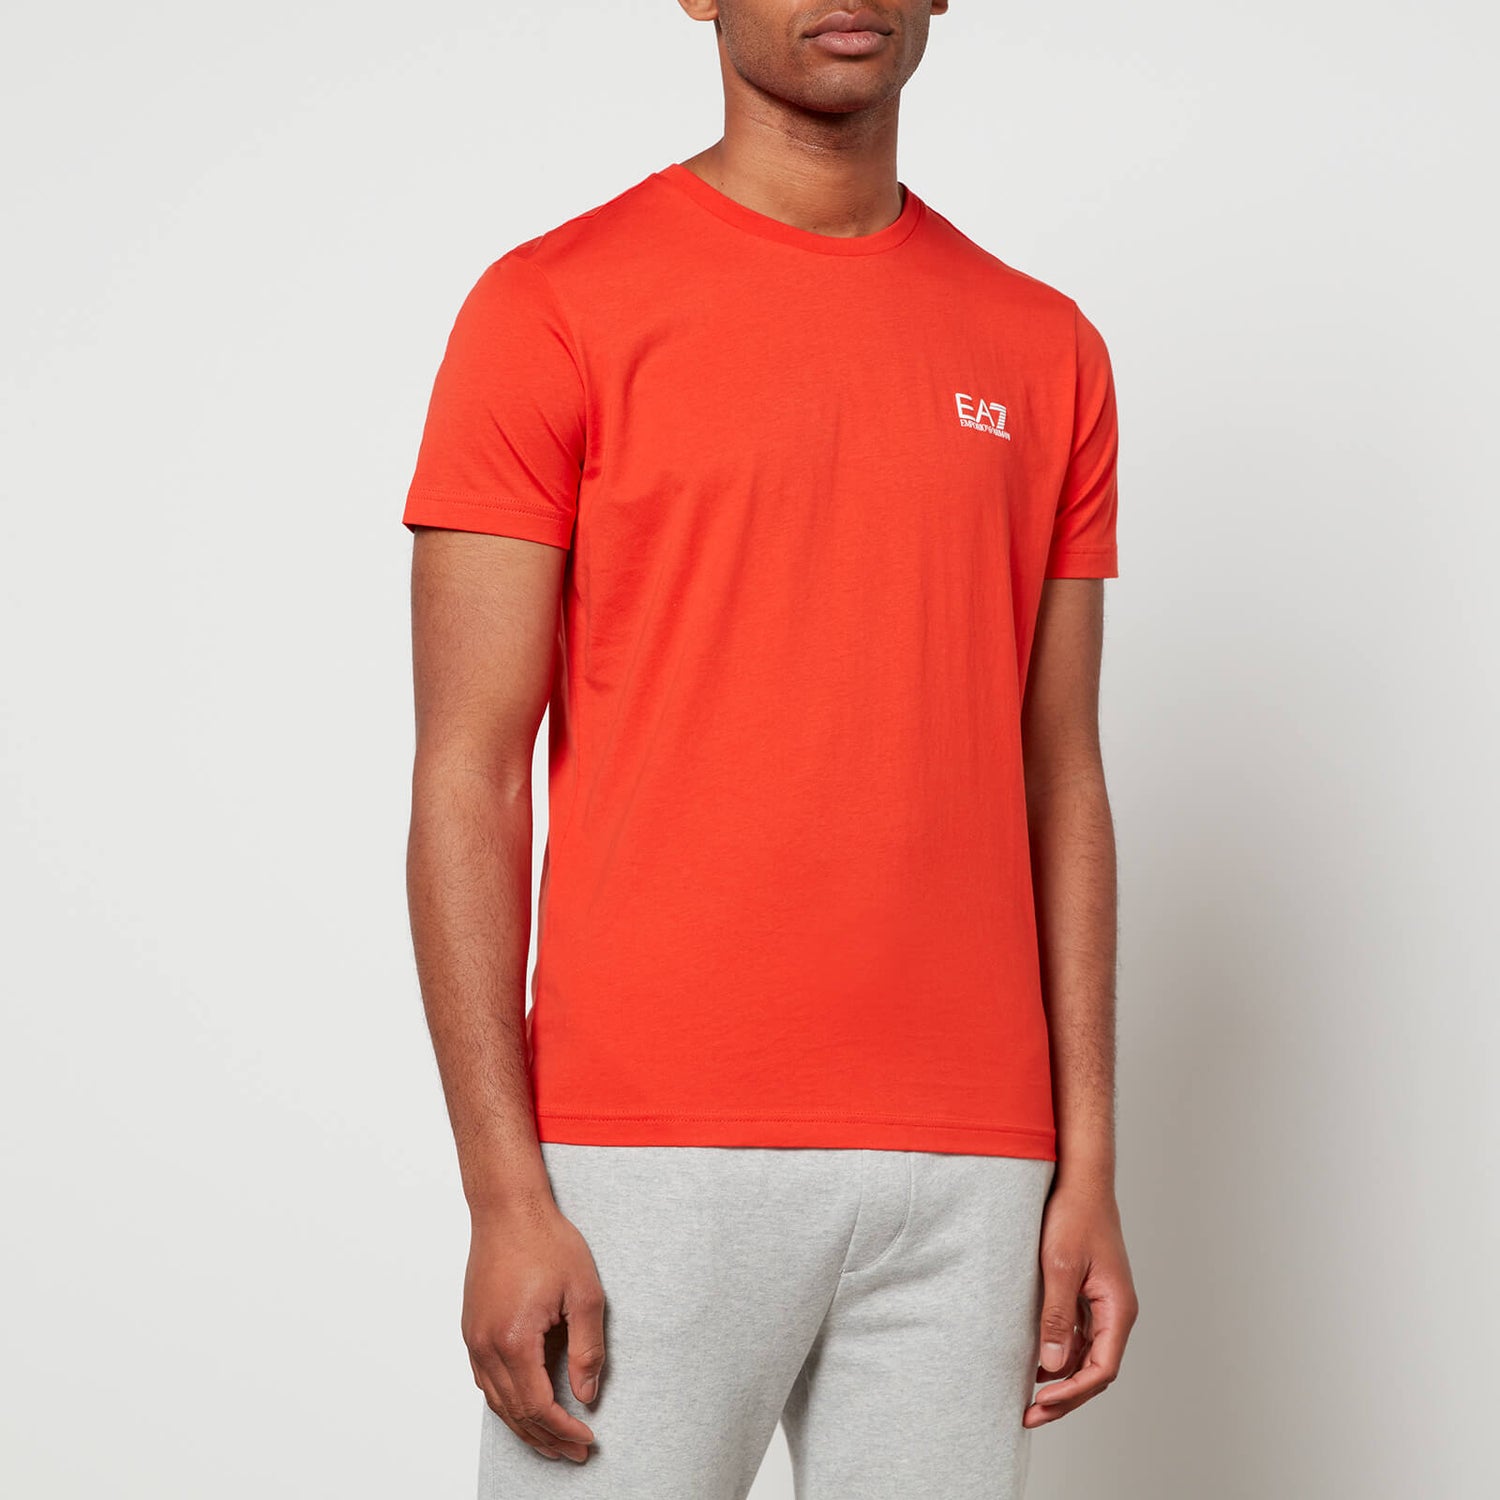 EA7 Men's Core Identity T-Shirt - Orange - M